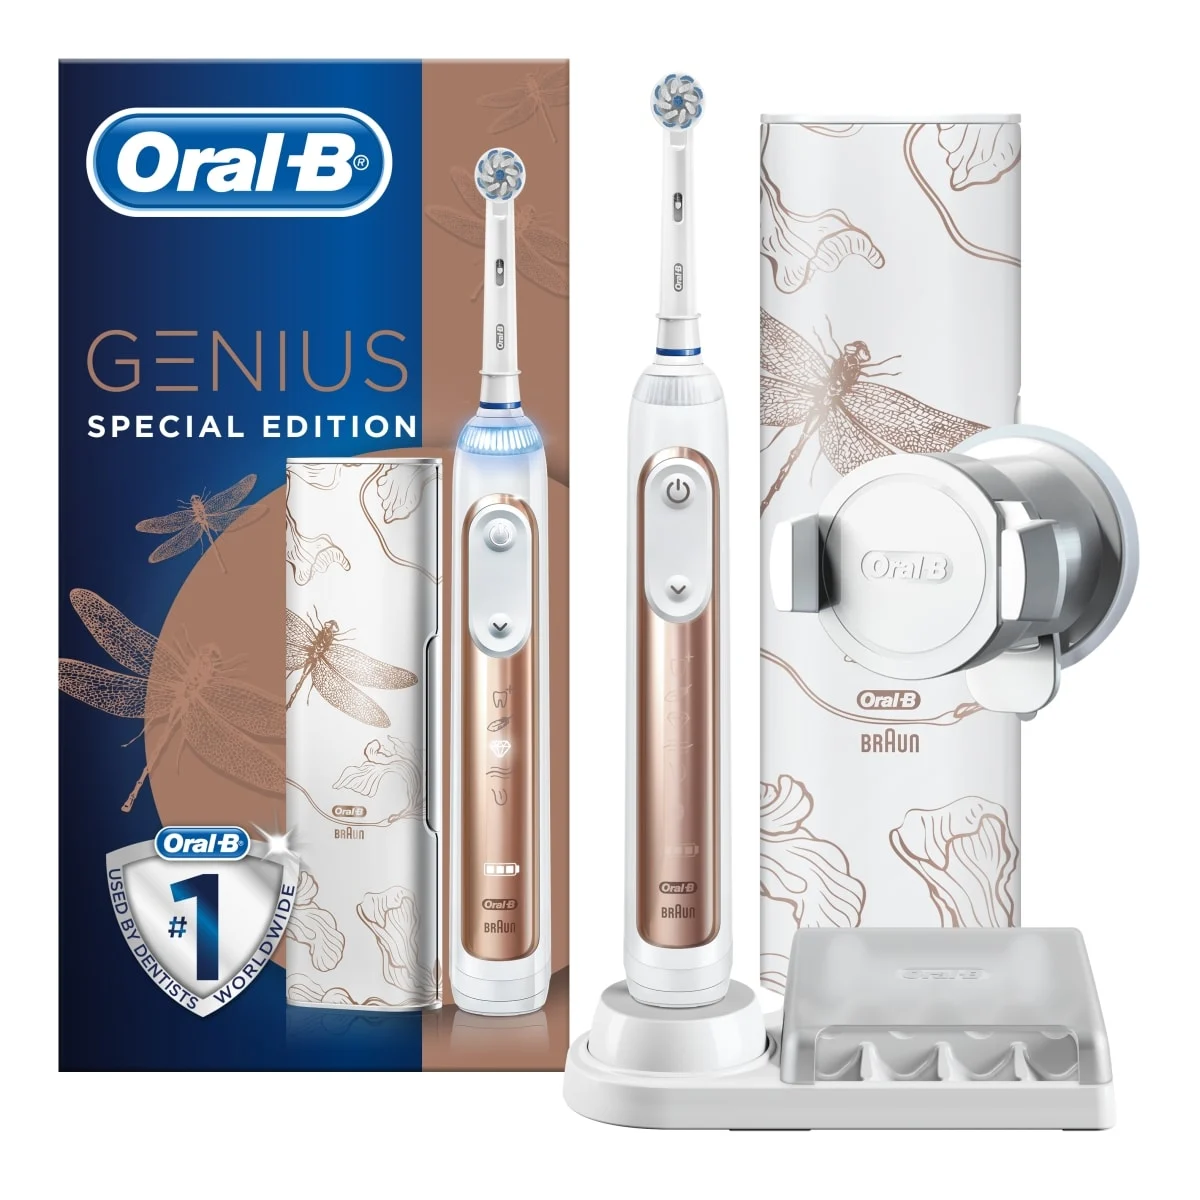 Oral-B Genius Special Edition Rose Gold Akıllı Diş Fırçası 